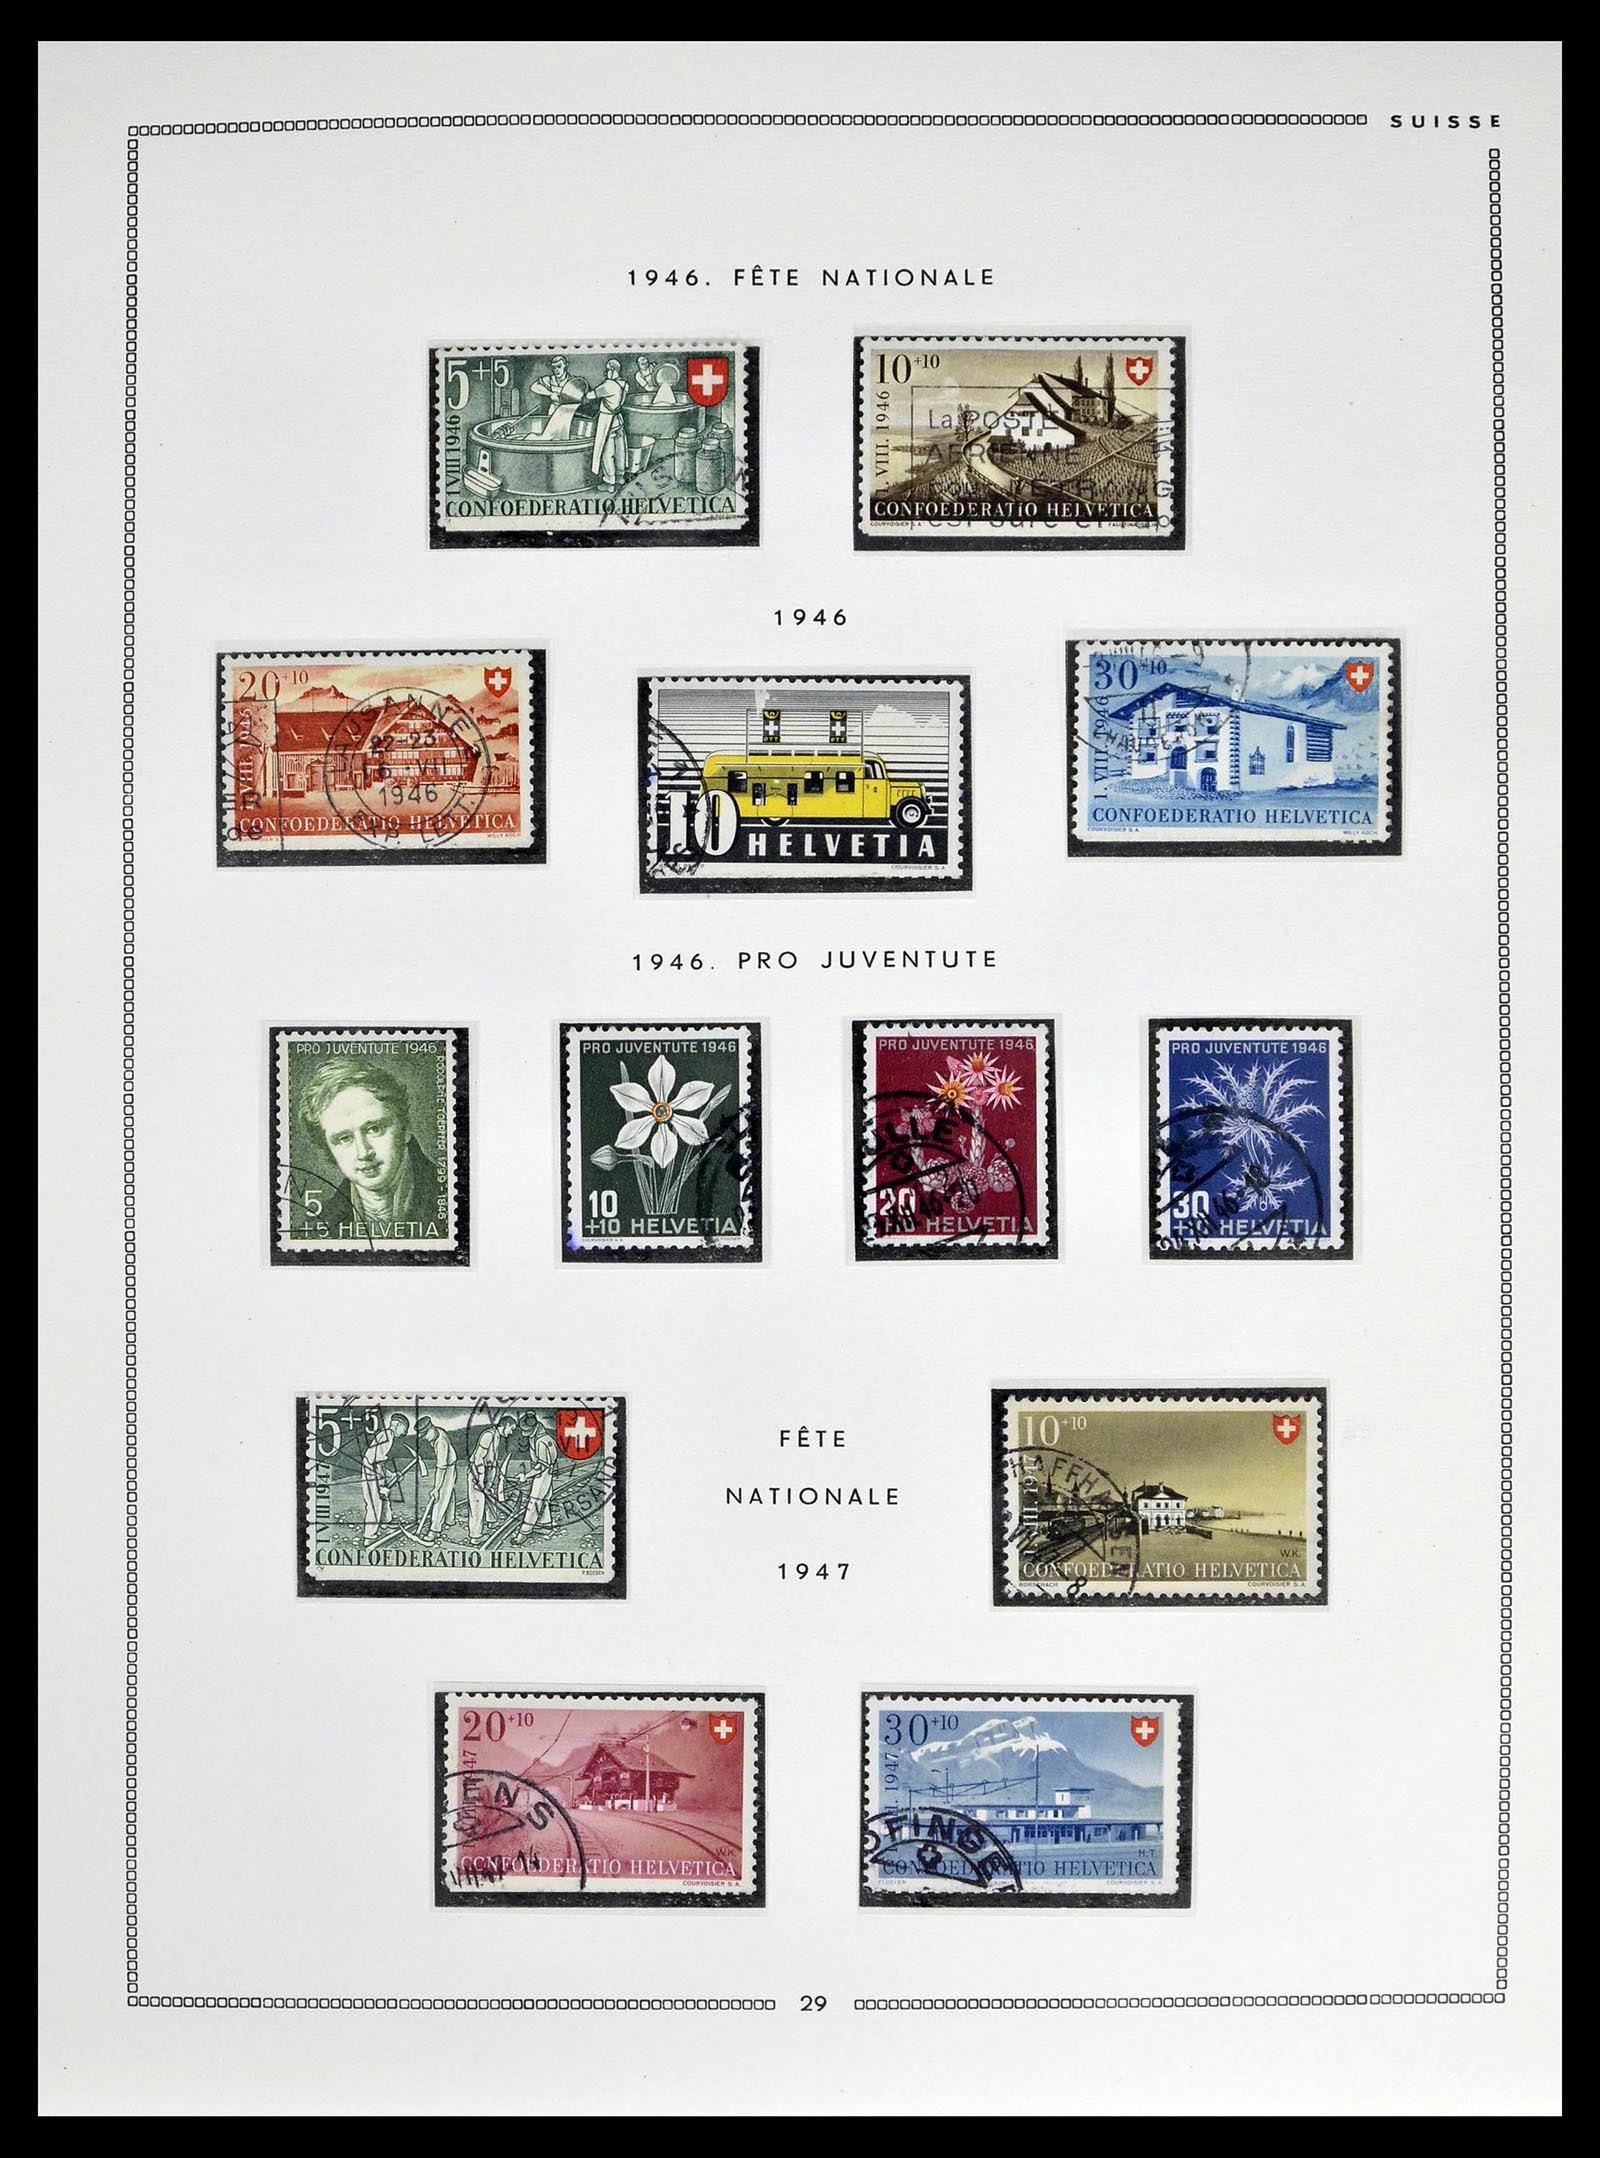 39094 0027 - Stamp collection 39094 Switzerland 1850-2005.